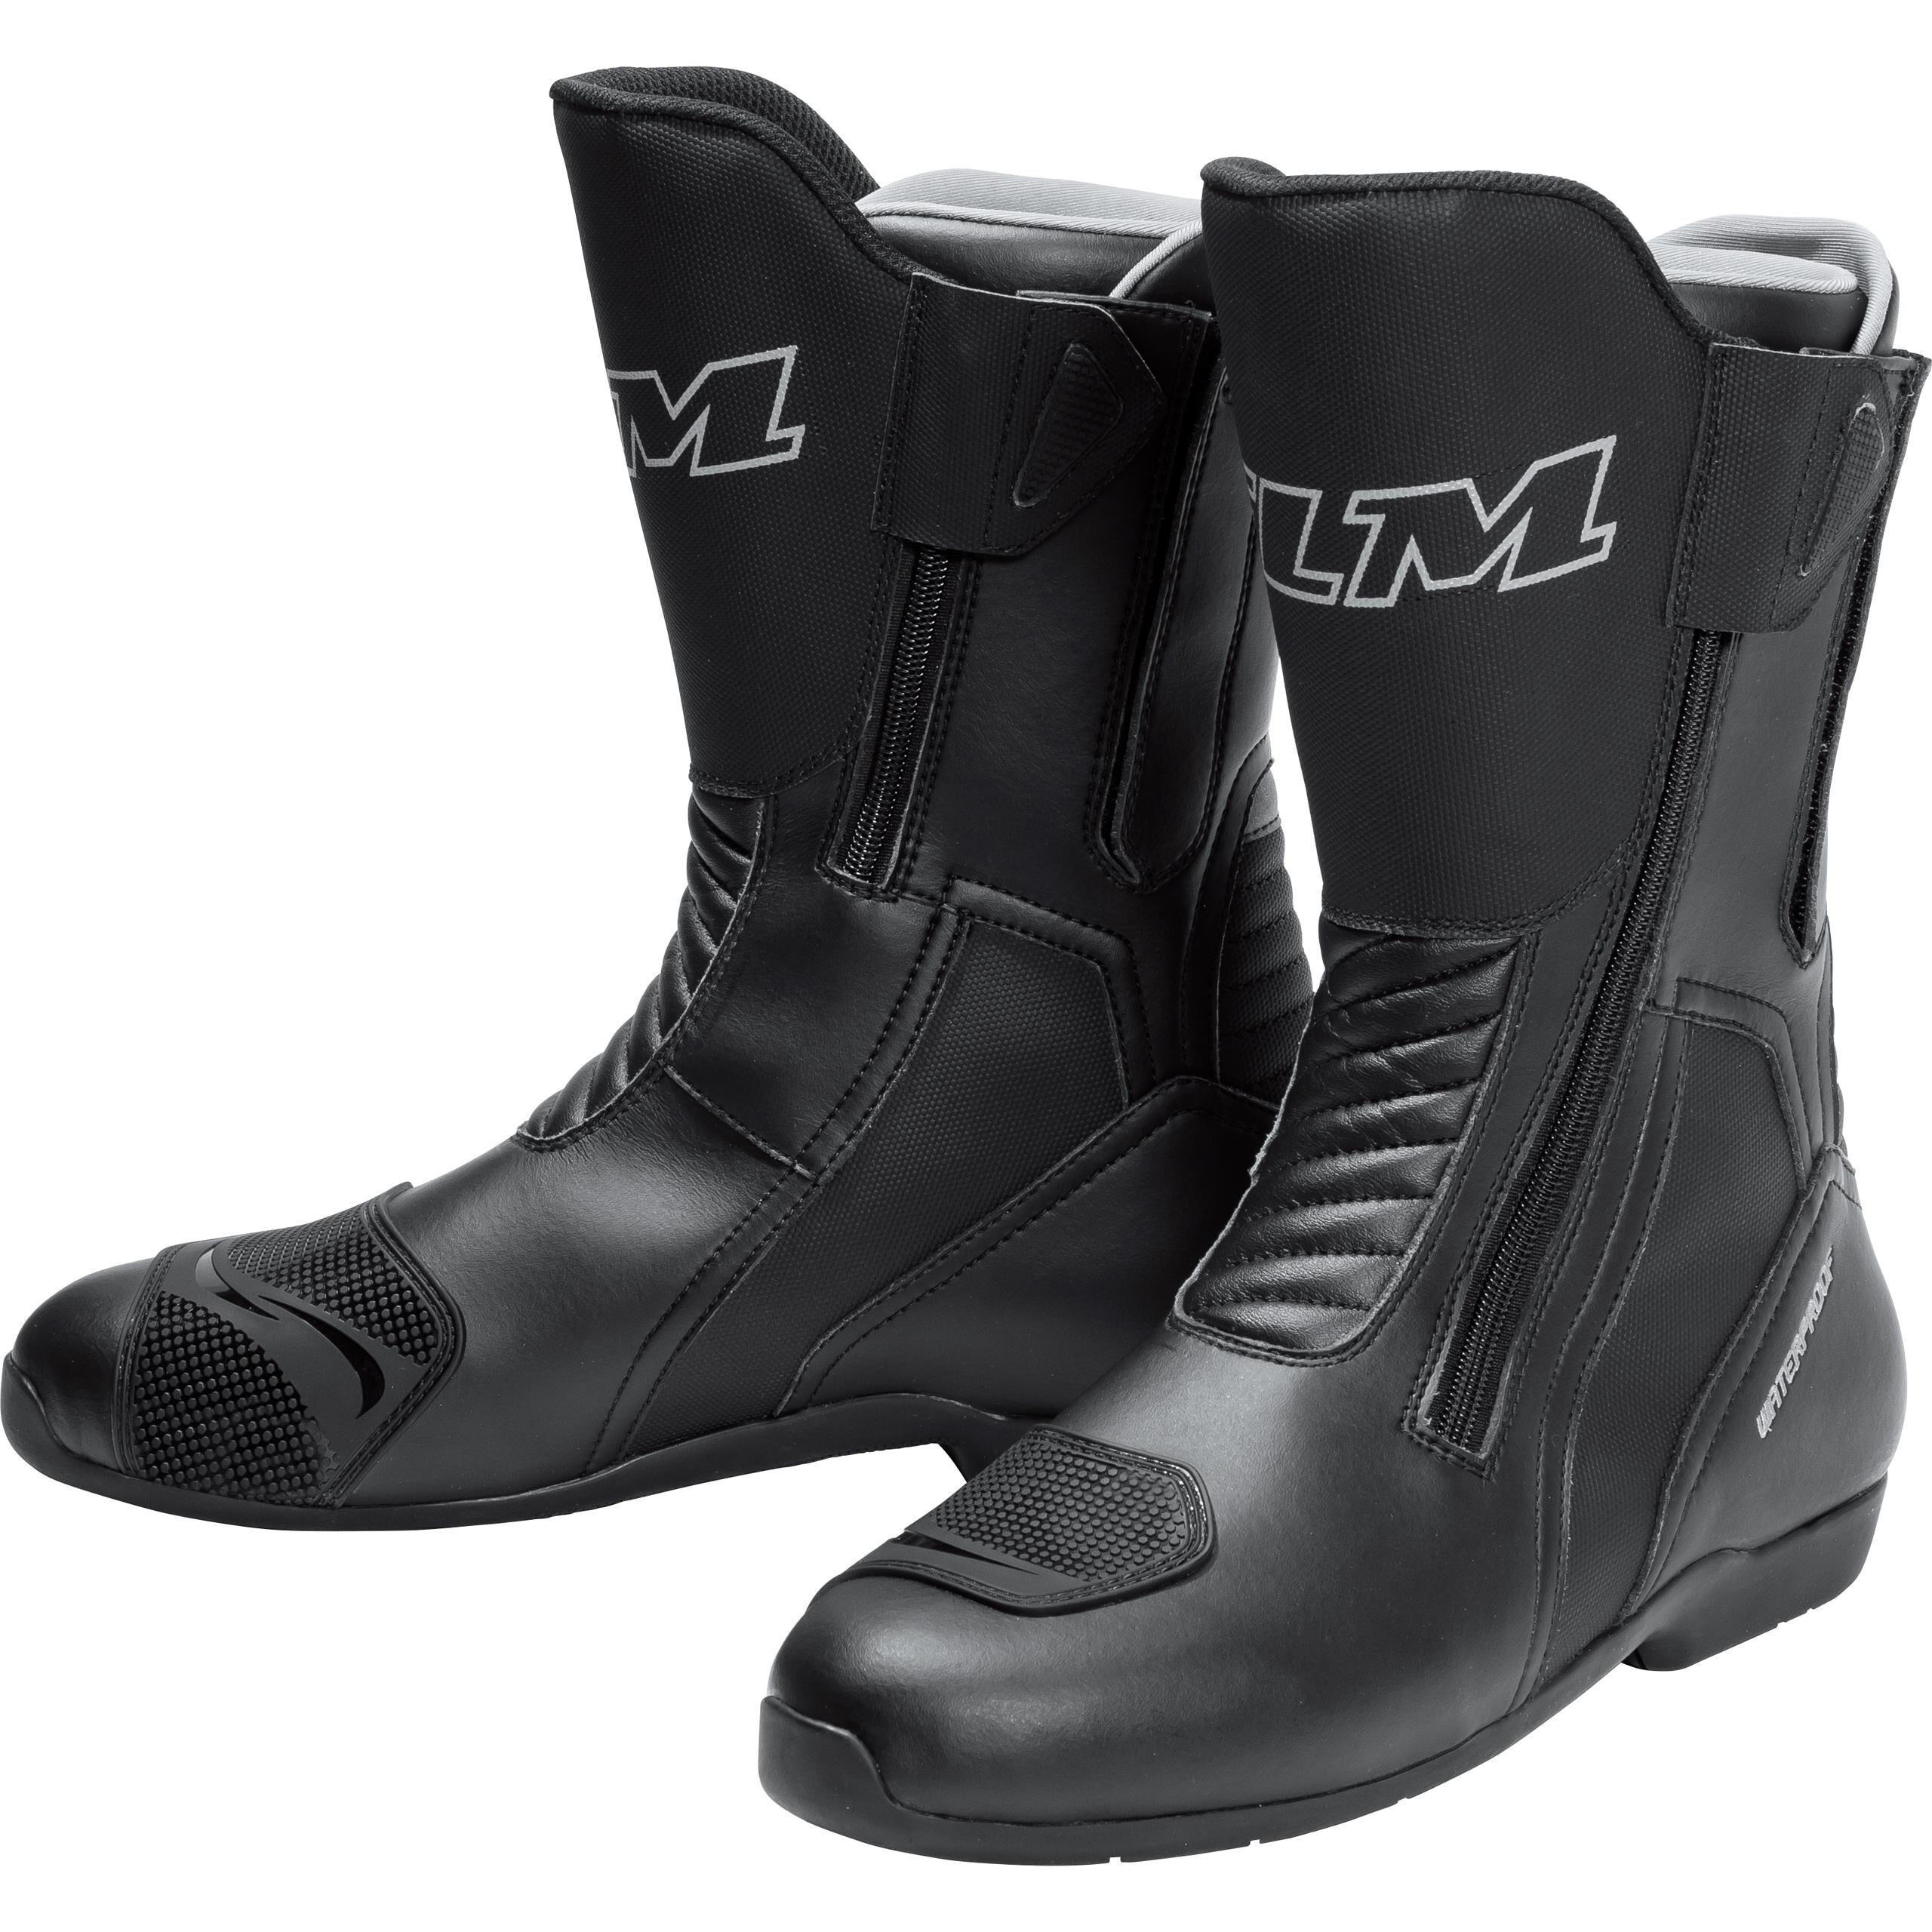 polo waterproof boots